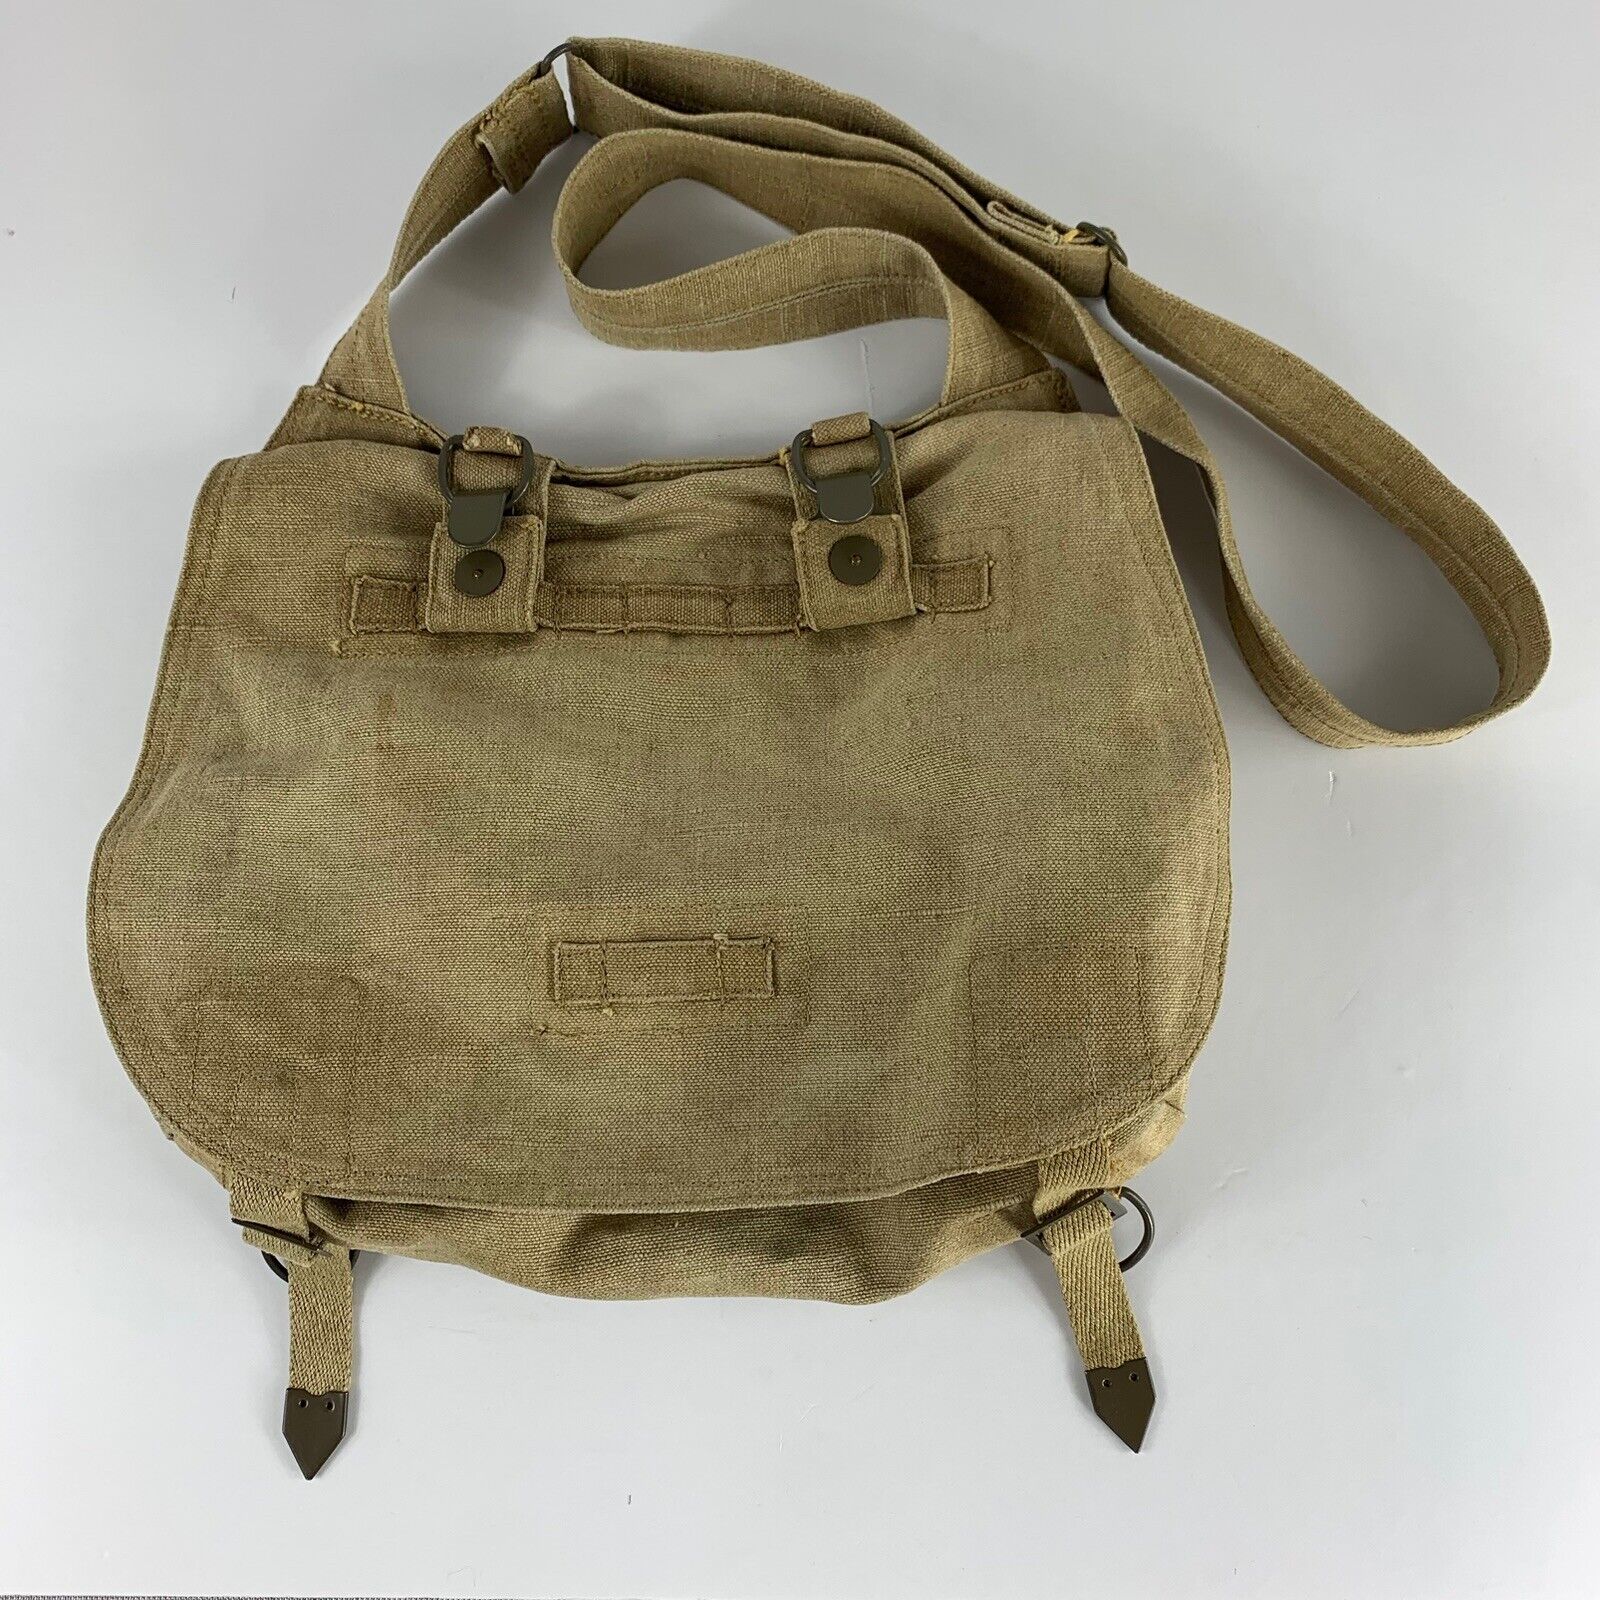 Vintage 1950's Army Military Messenger Field Bag Linen Canvas Cross Body Satchel